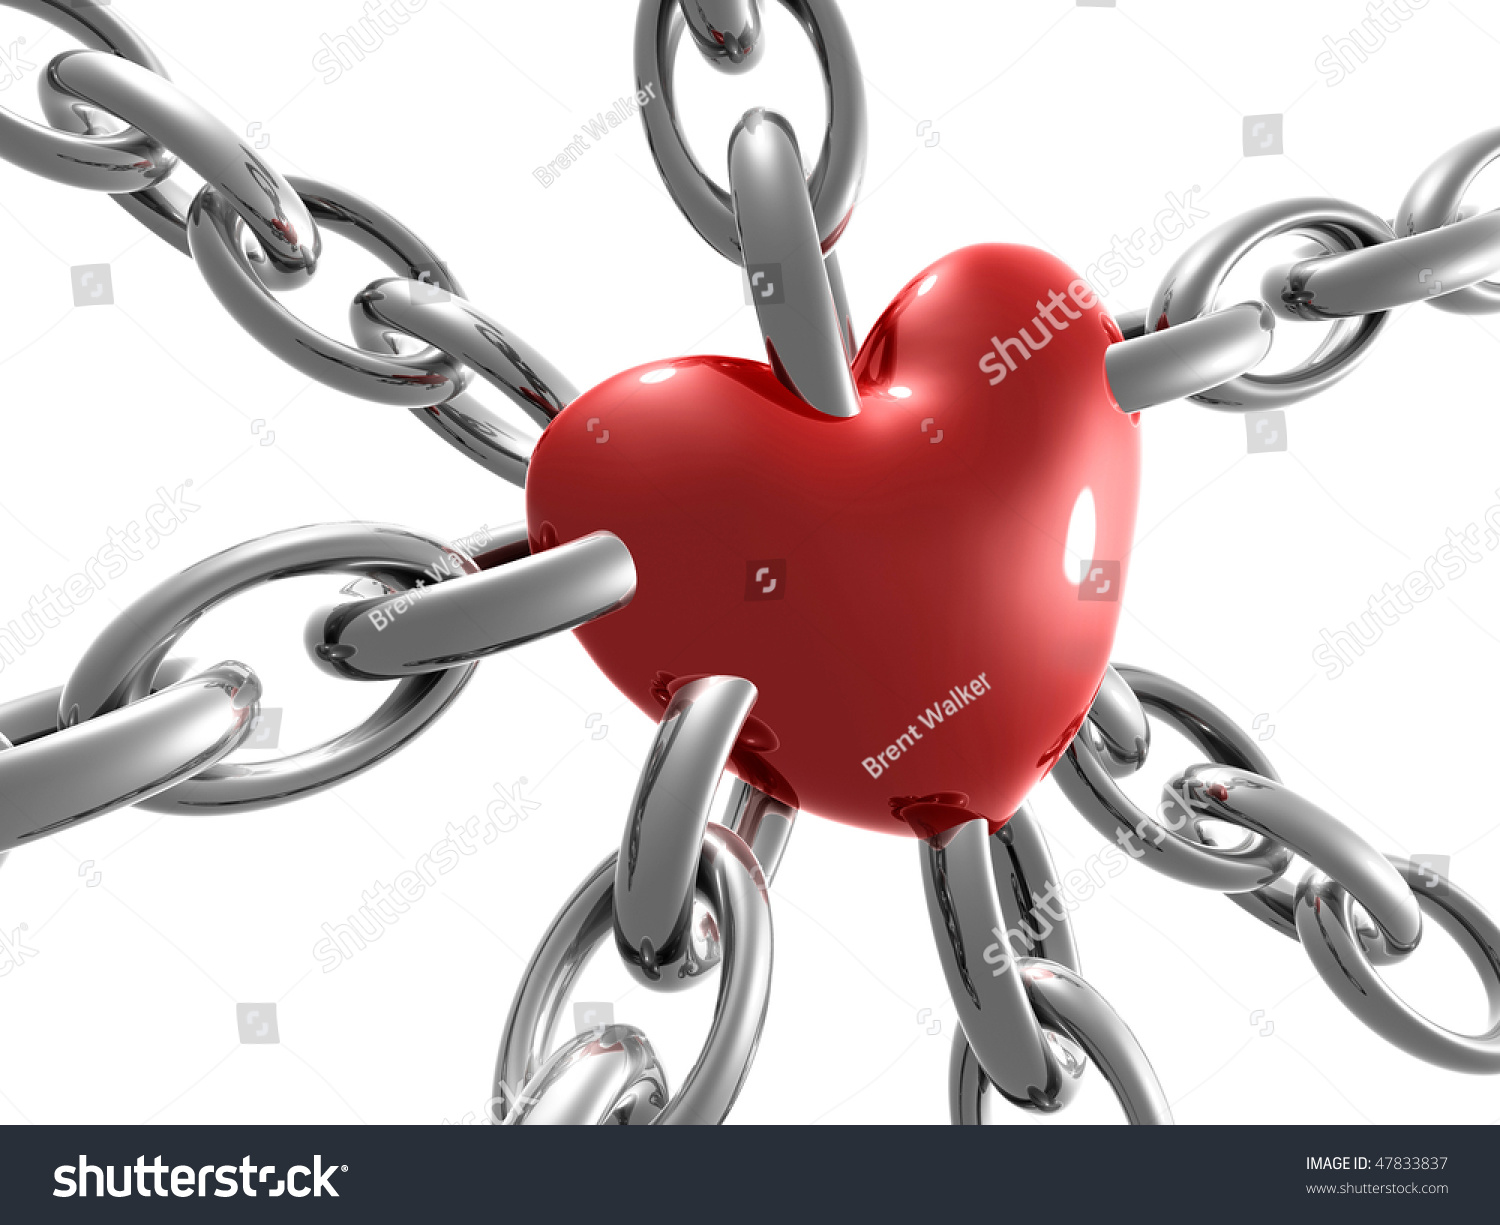 Chained Heart Illustration - 47833837 : Shutterstock